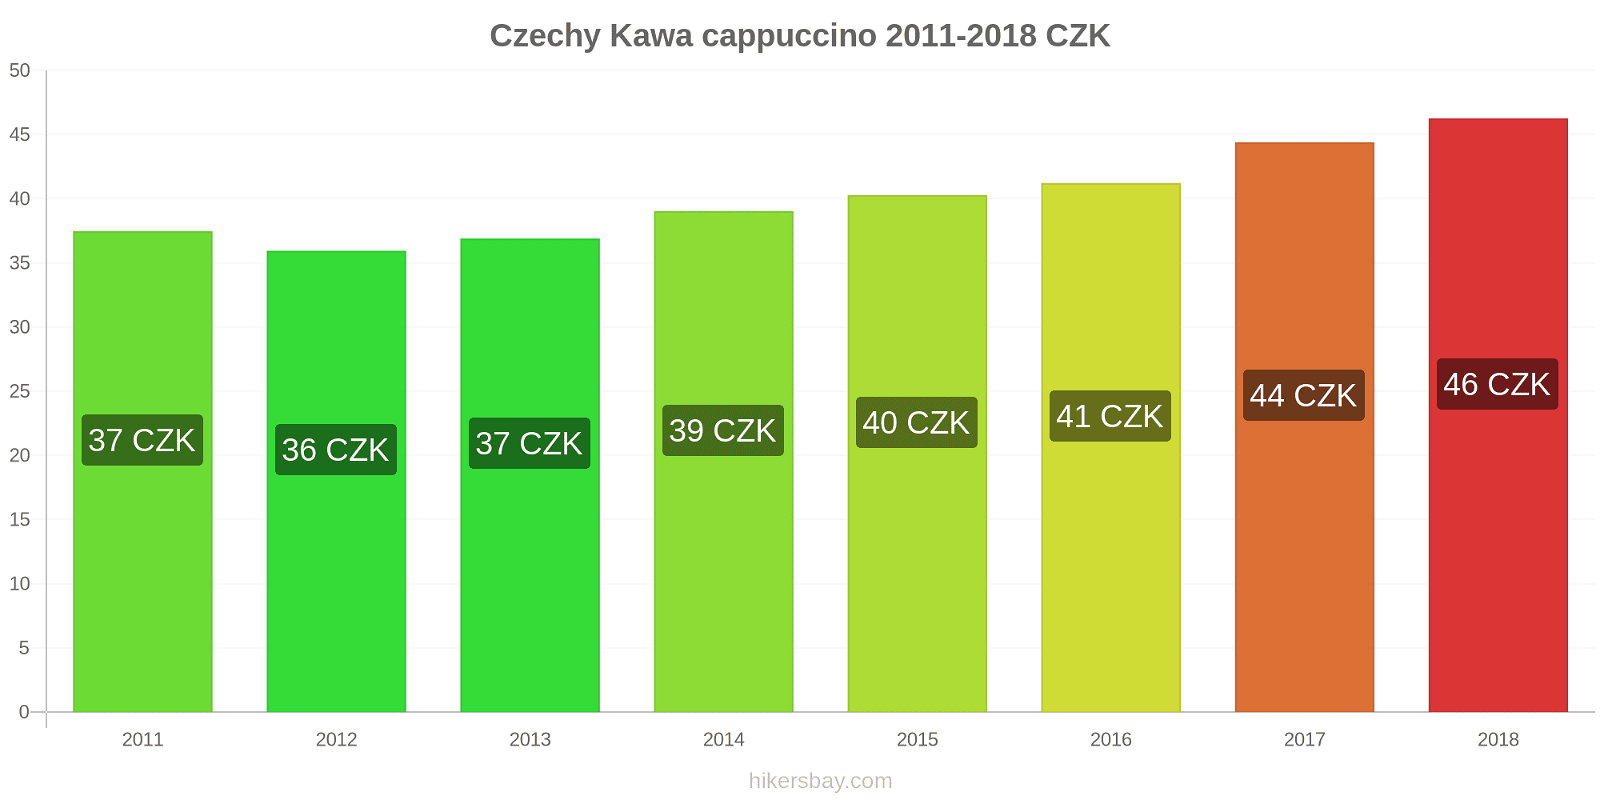 Czechy zmiany cen Kawa cappuccino hikersbay.com